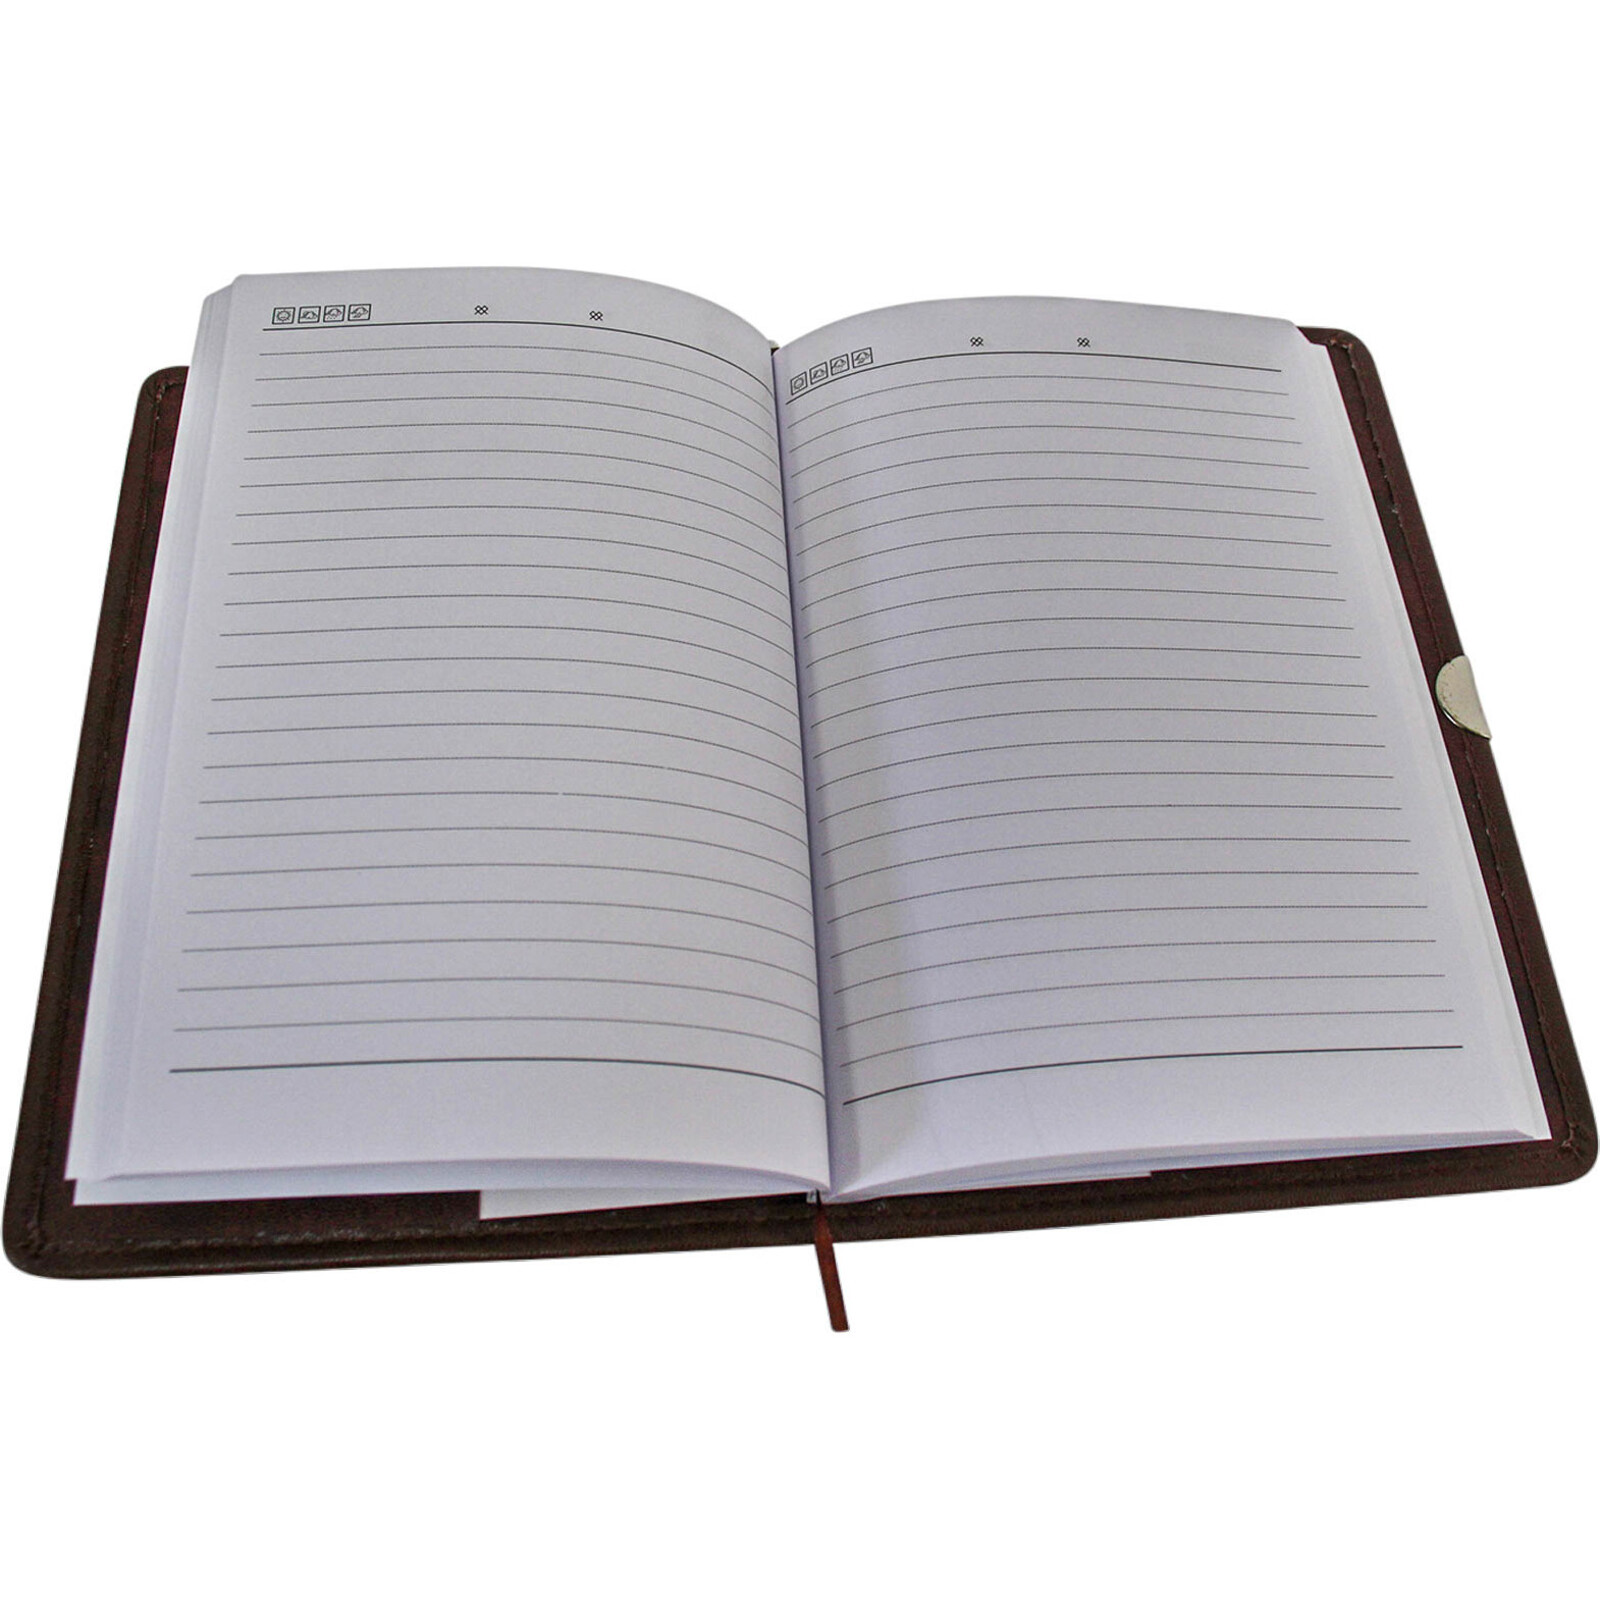 Notebook Lrg Spaniel